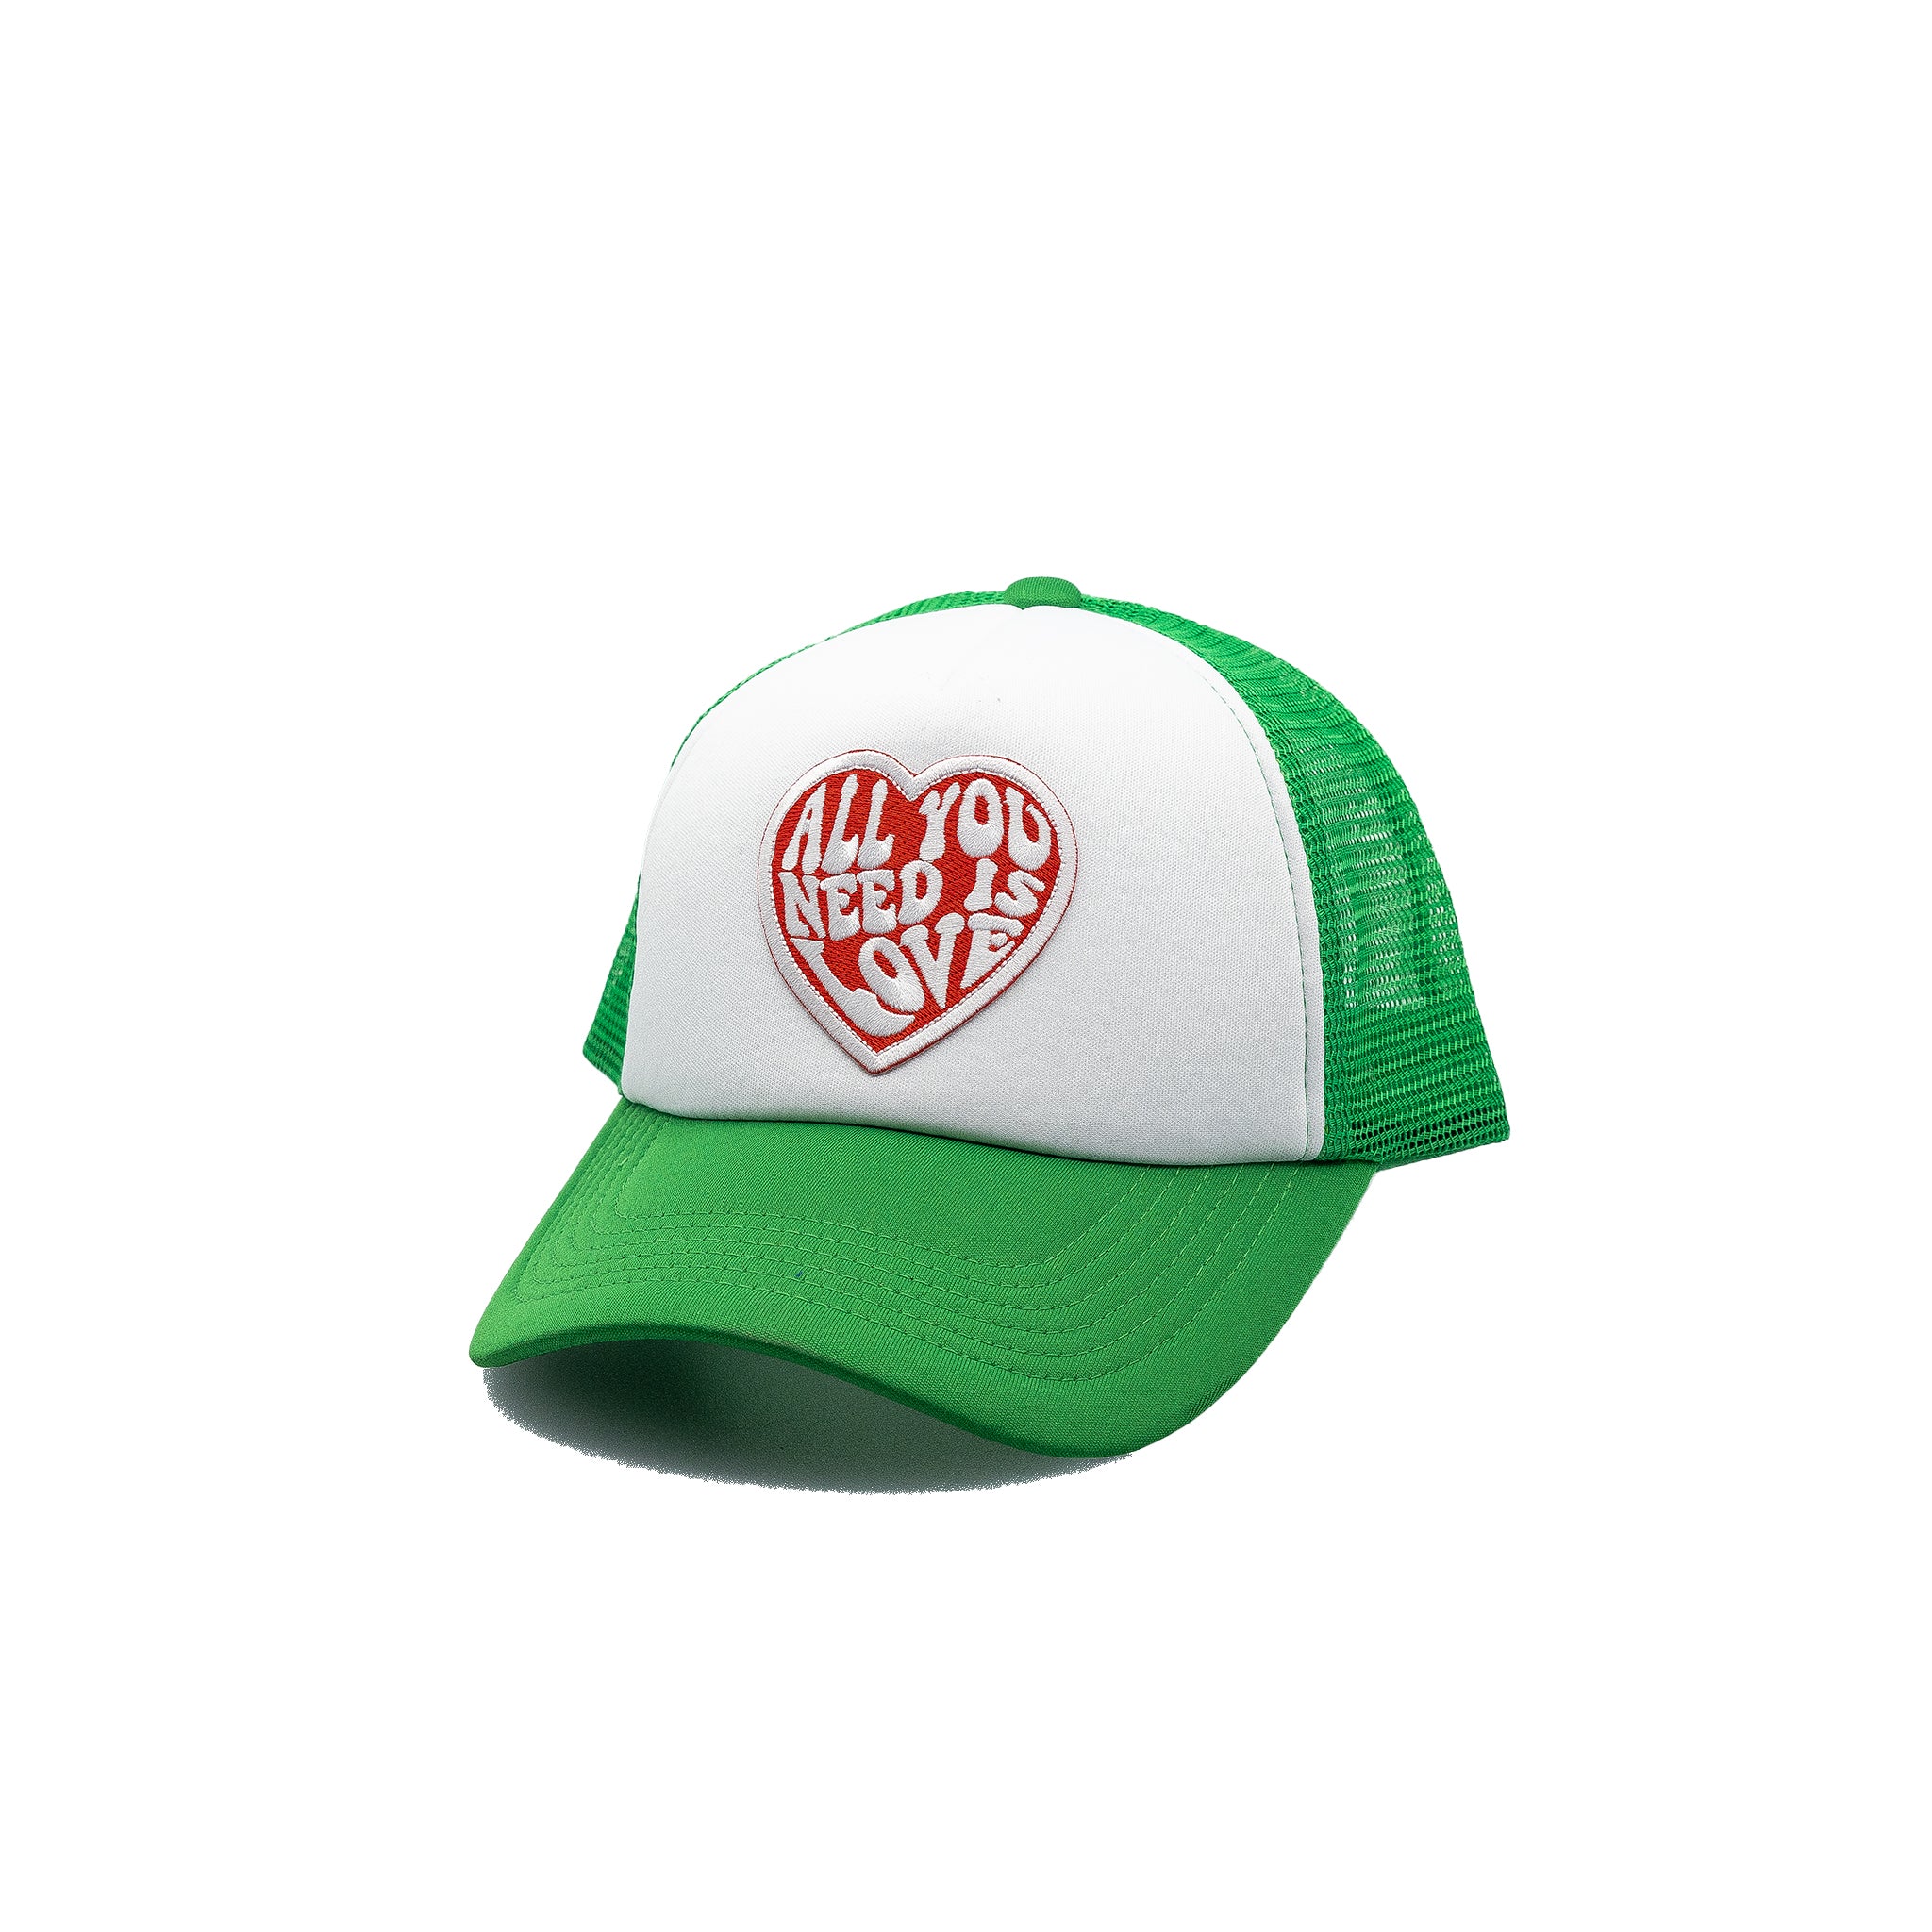 All you Need is Love Green Trucker Hat – TruckerHatme